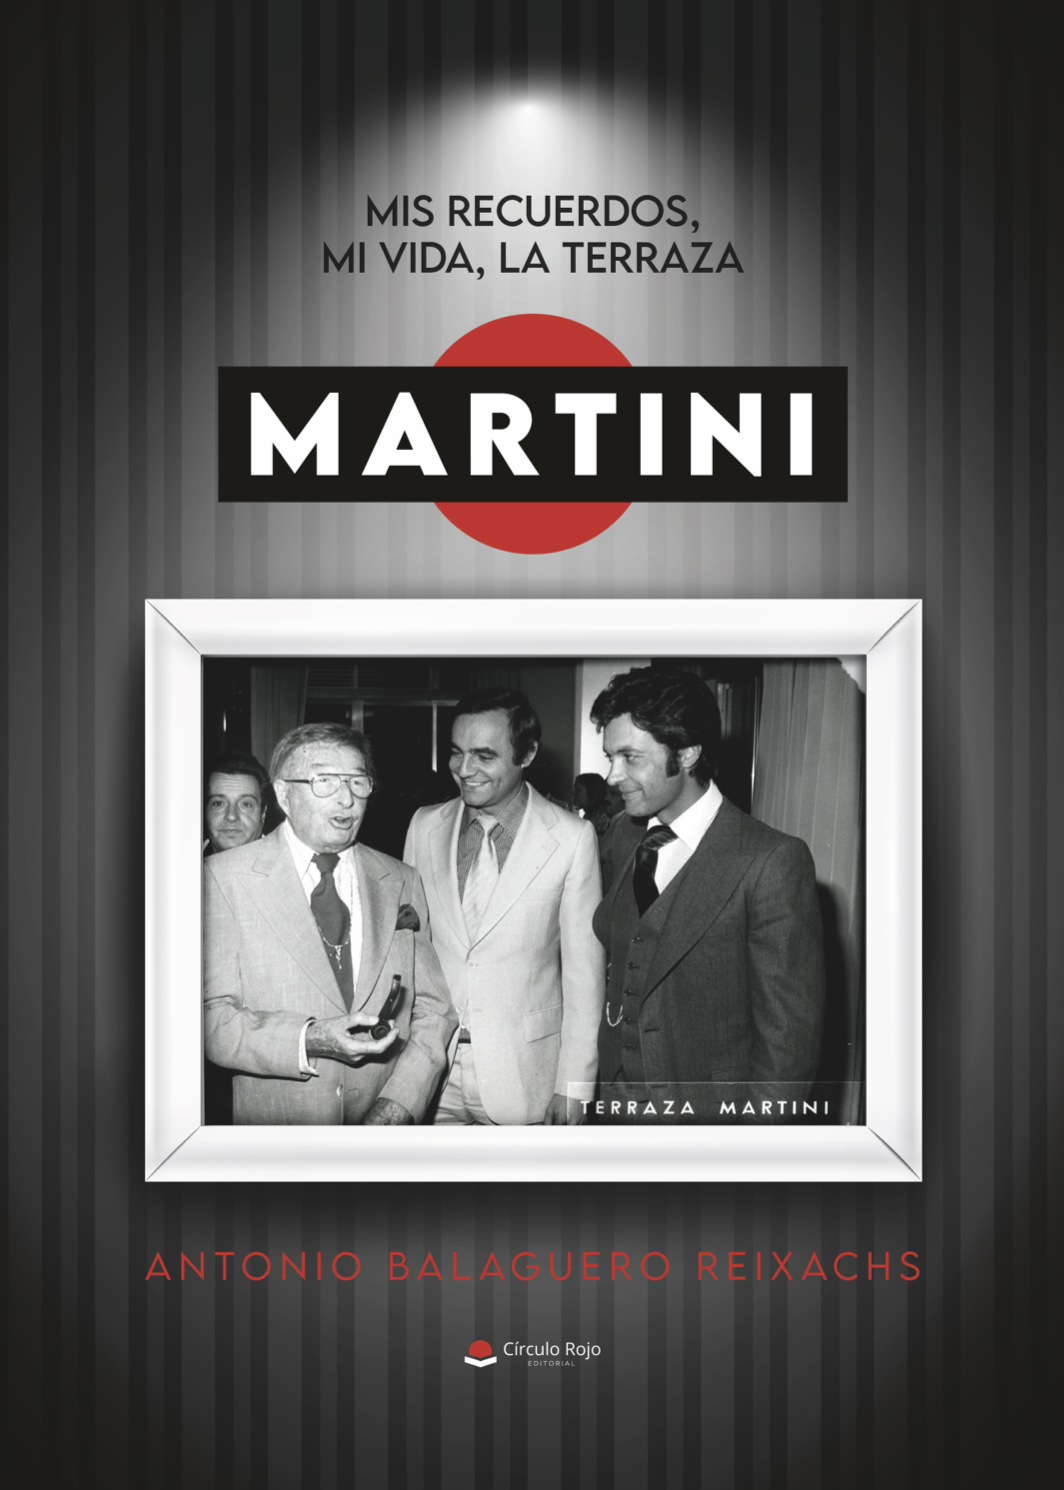 Reseña de “Mis recuerdos, mi vida: La Terraza Martini”, obra de Tony Balagueró | Por Daniel González.